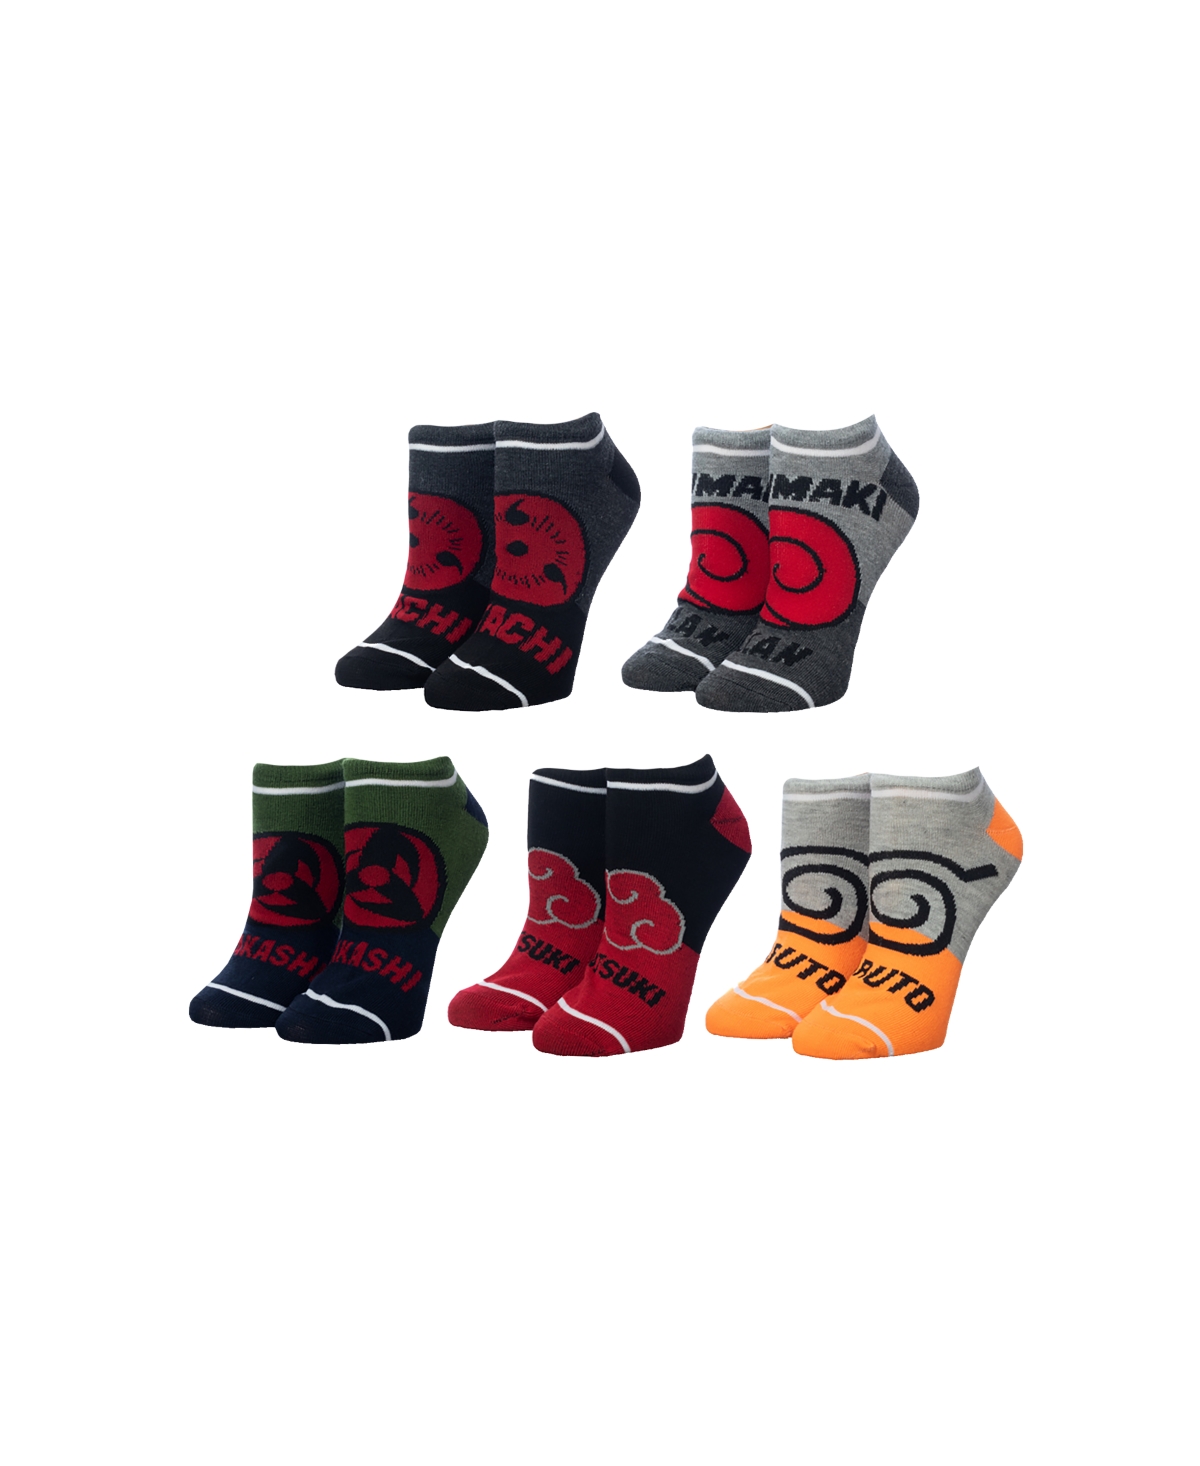 Men's Anime Colorblock Casual Ankle Socks for Men 5-Pack - Multicolored